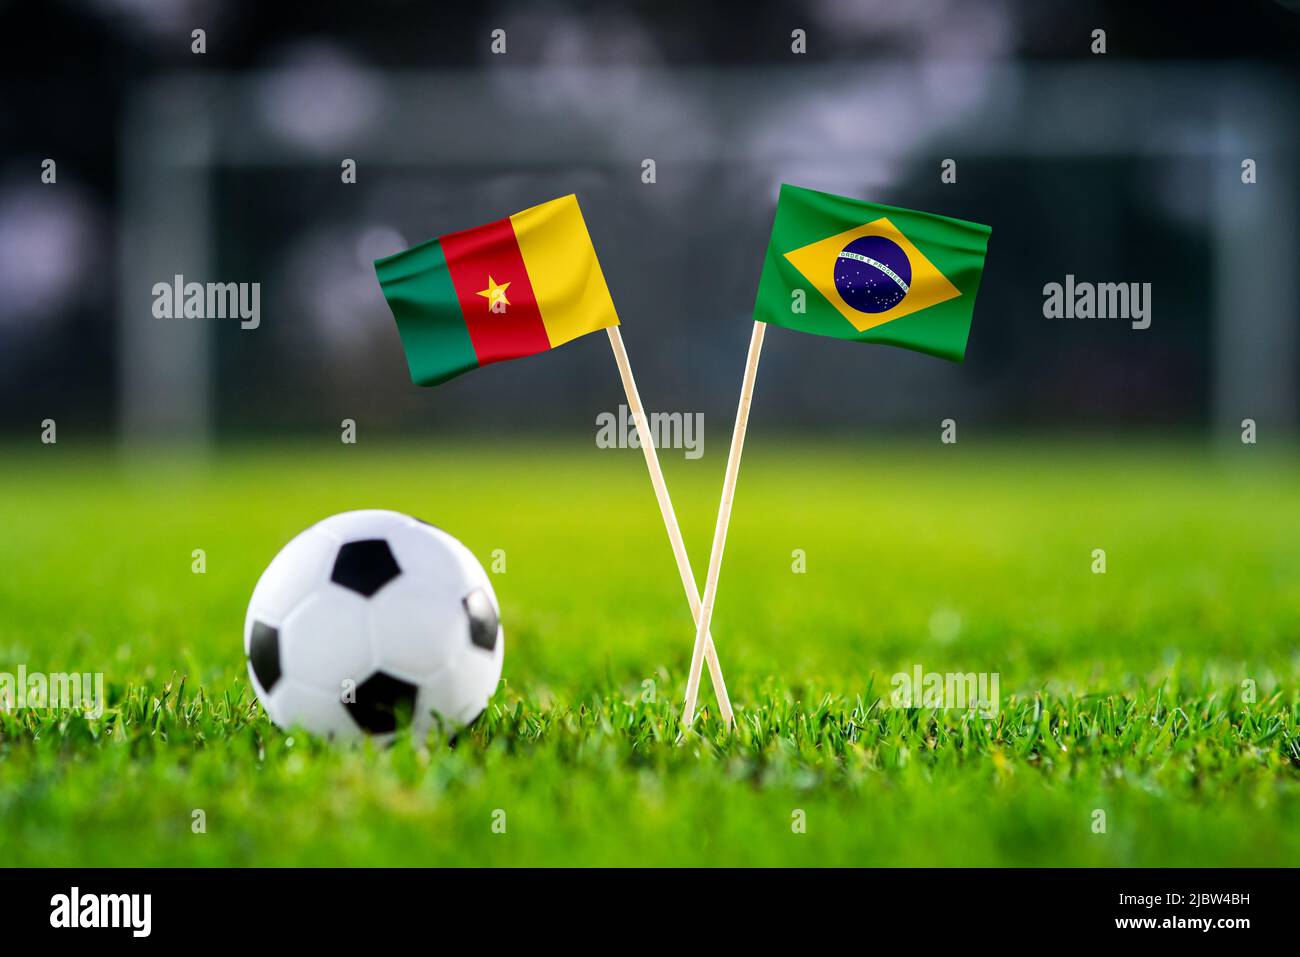 Cameroon vs. Brazil, Lusail, Football match wallpaper, Handmade national flags and soccer ball on green grass. Football stadium in background. Black e Stock Photo